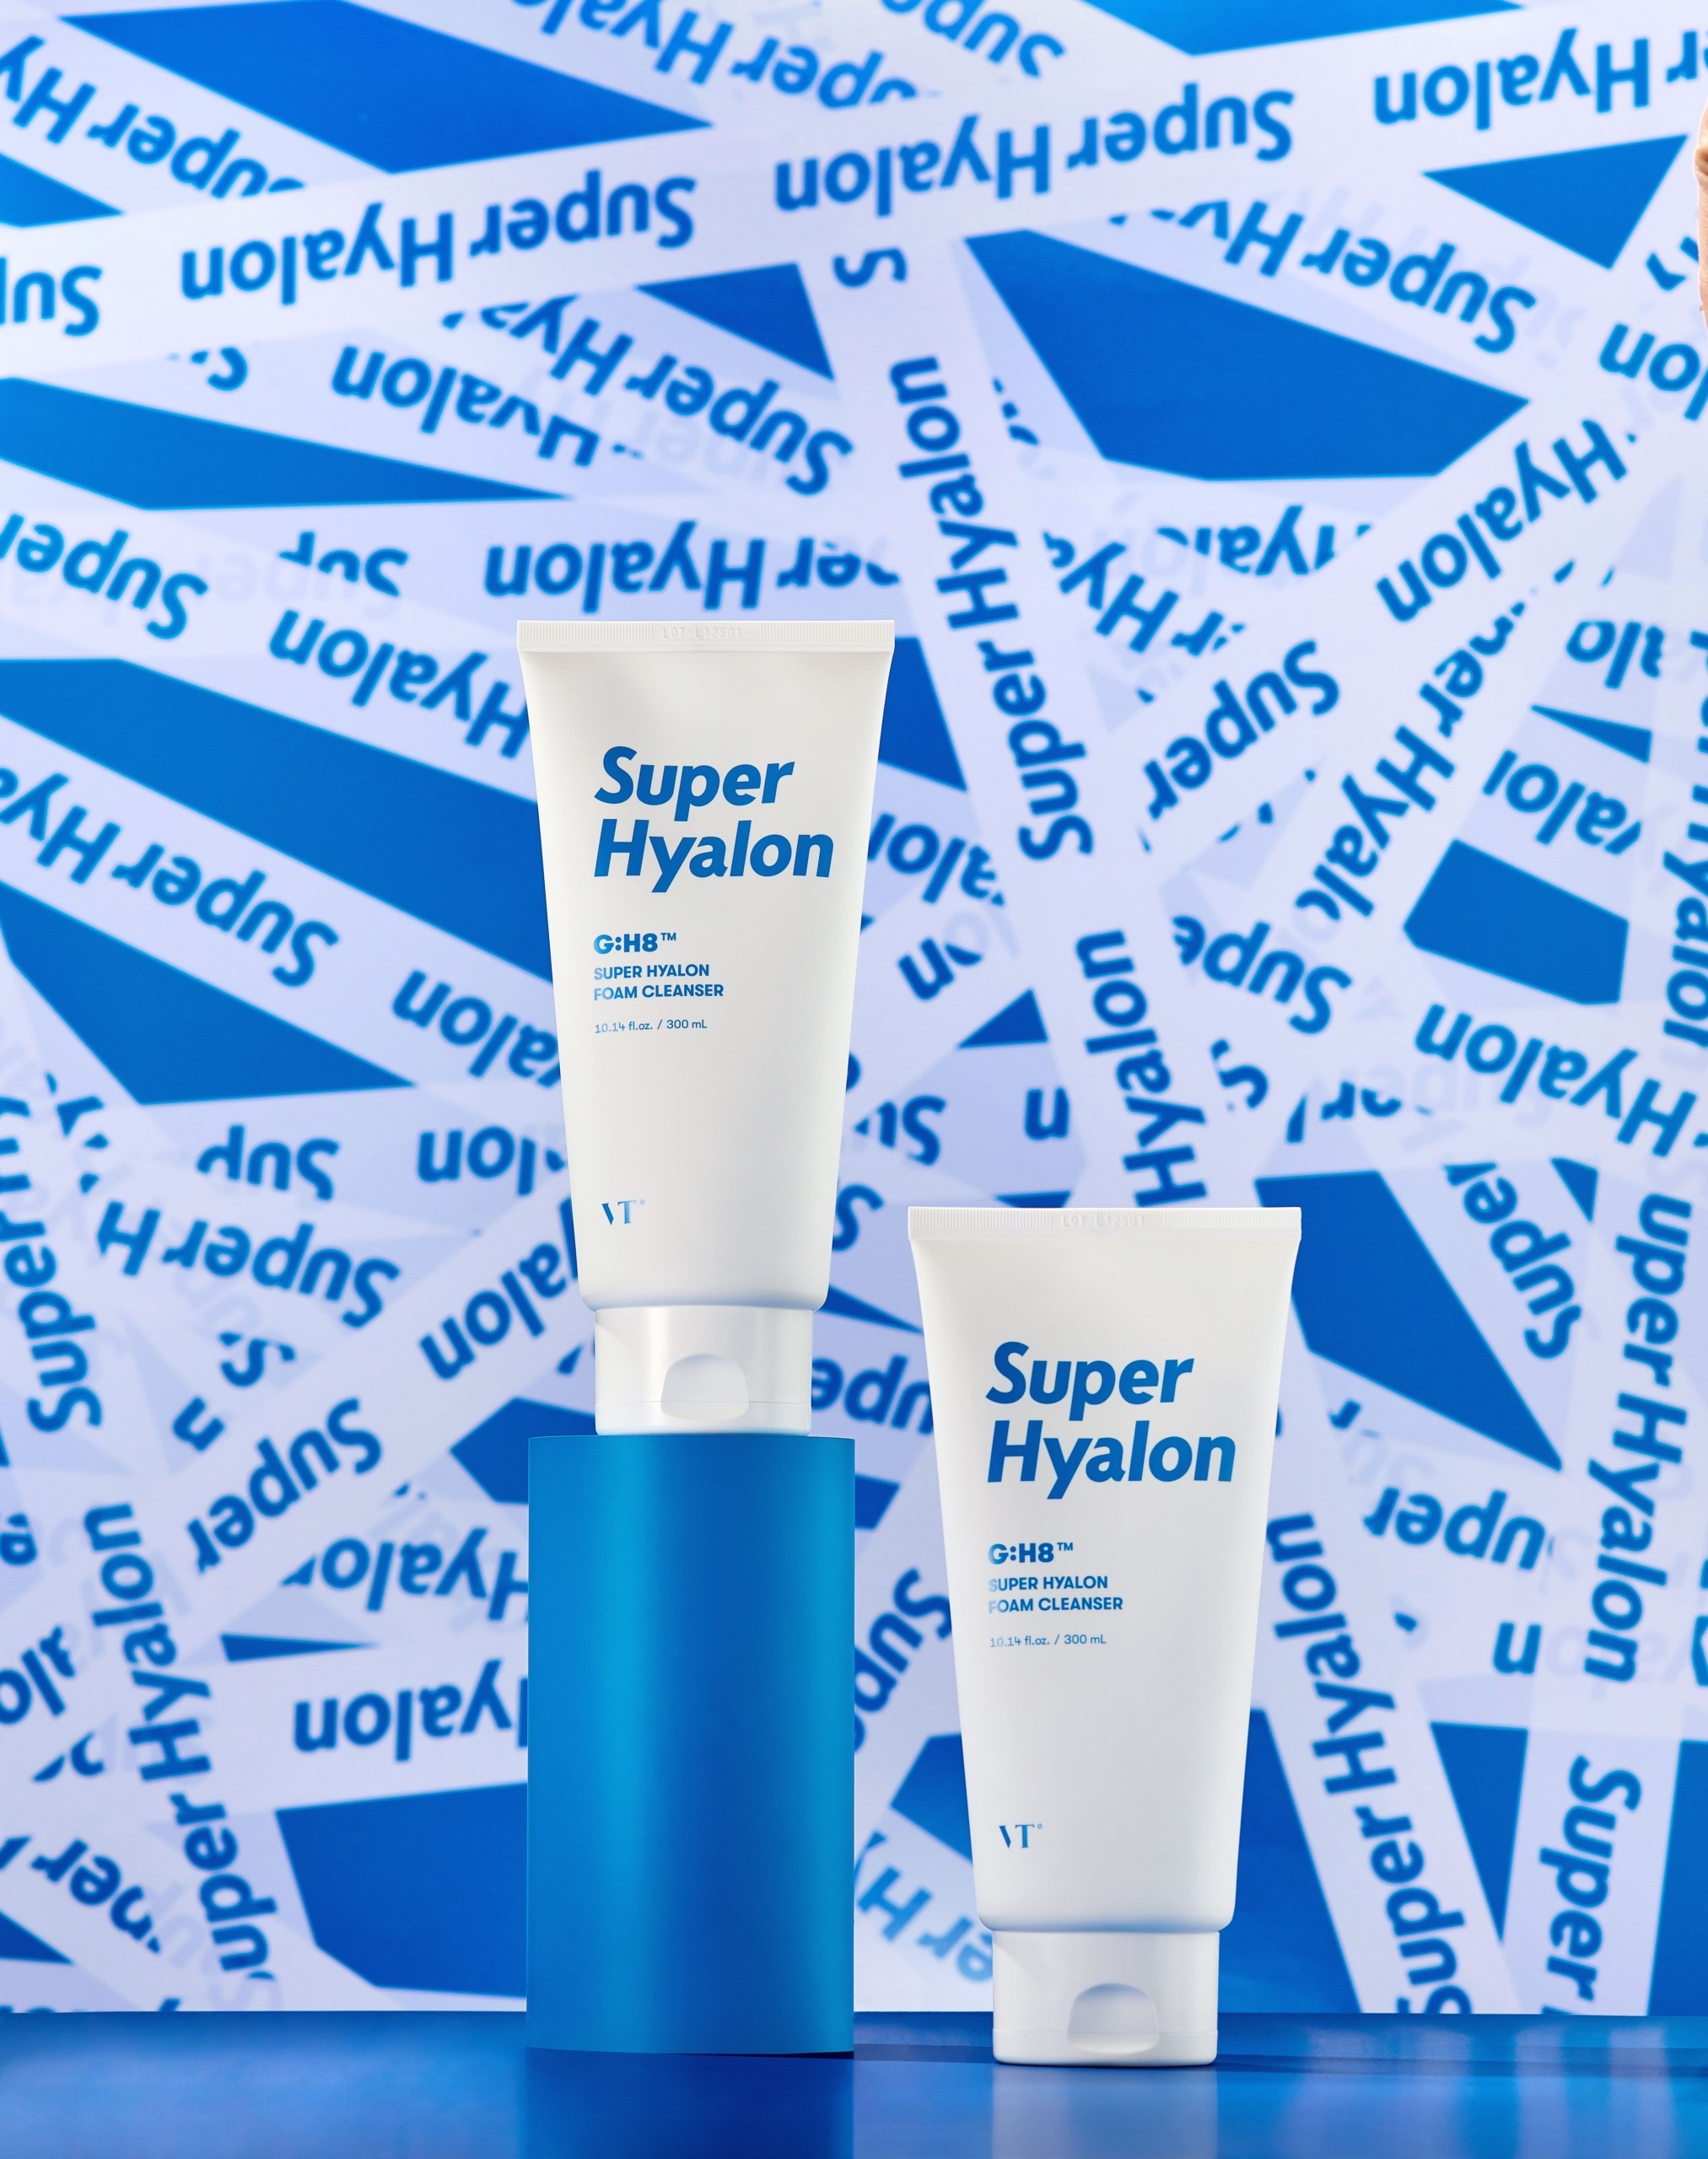 VT super hyalon foam cleanser-compressed